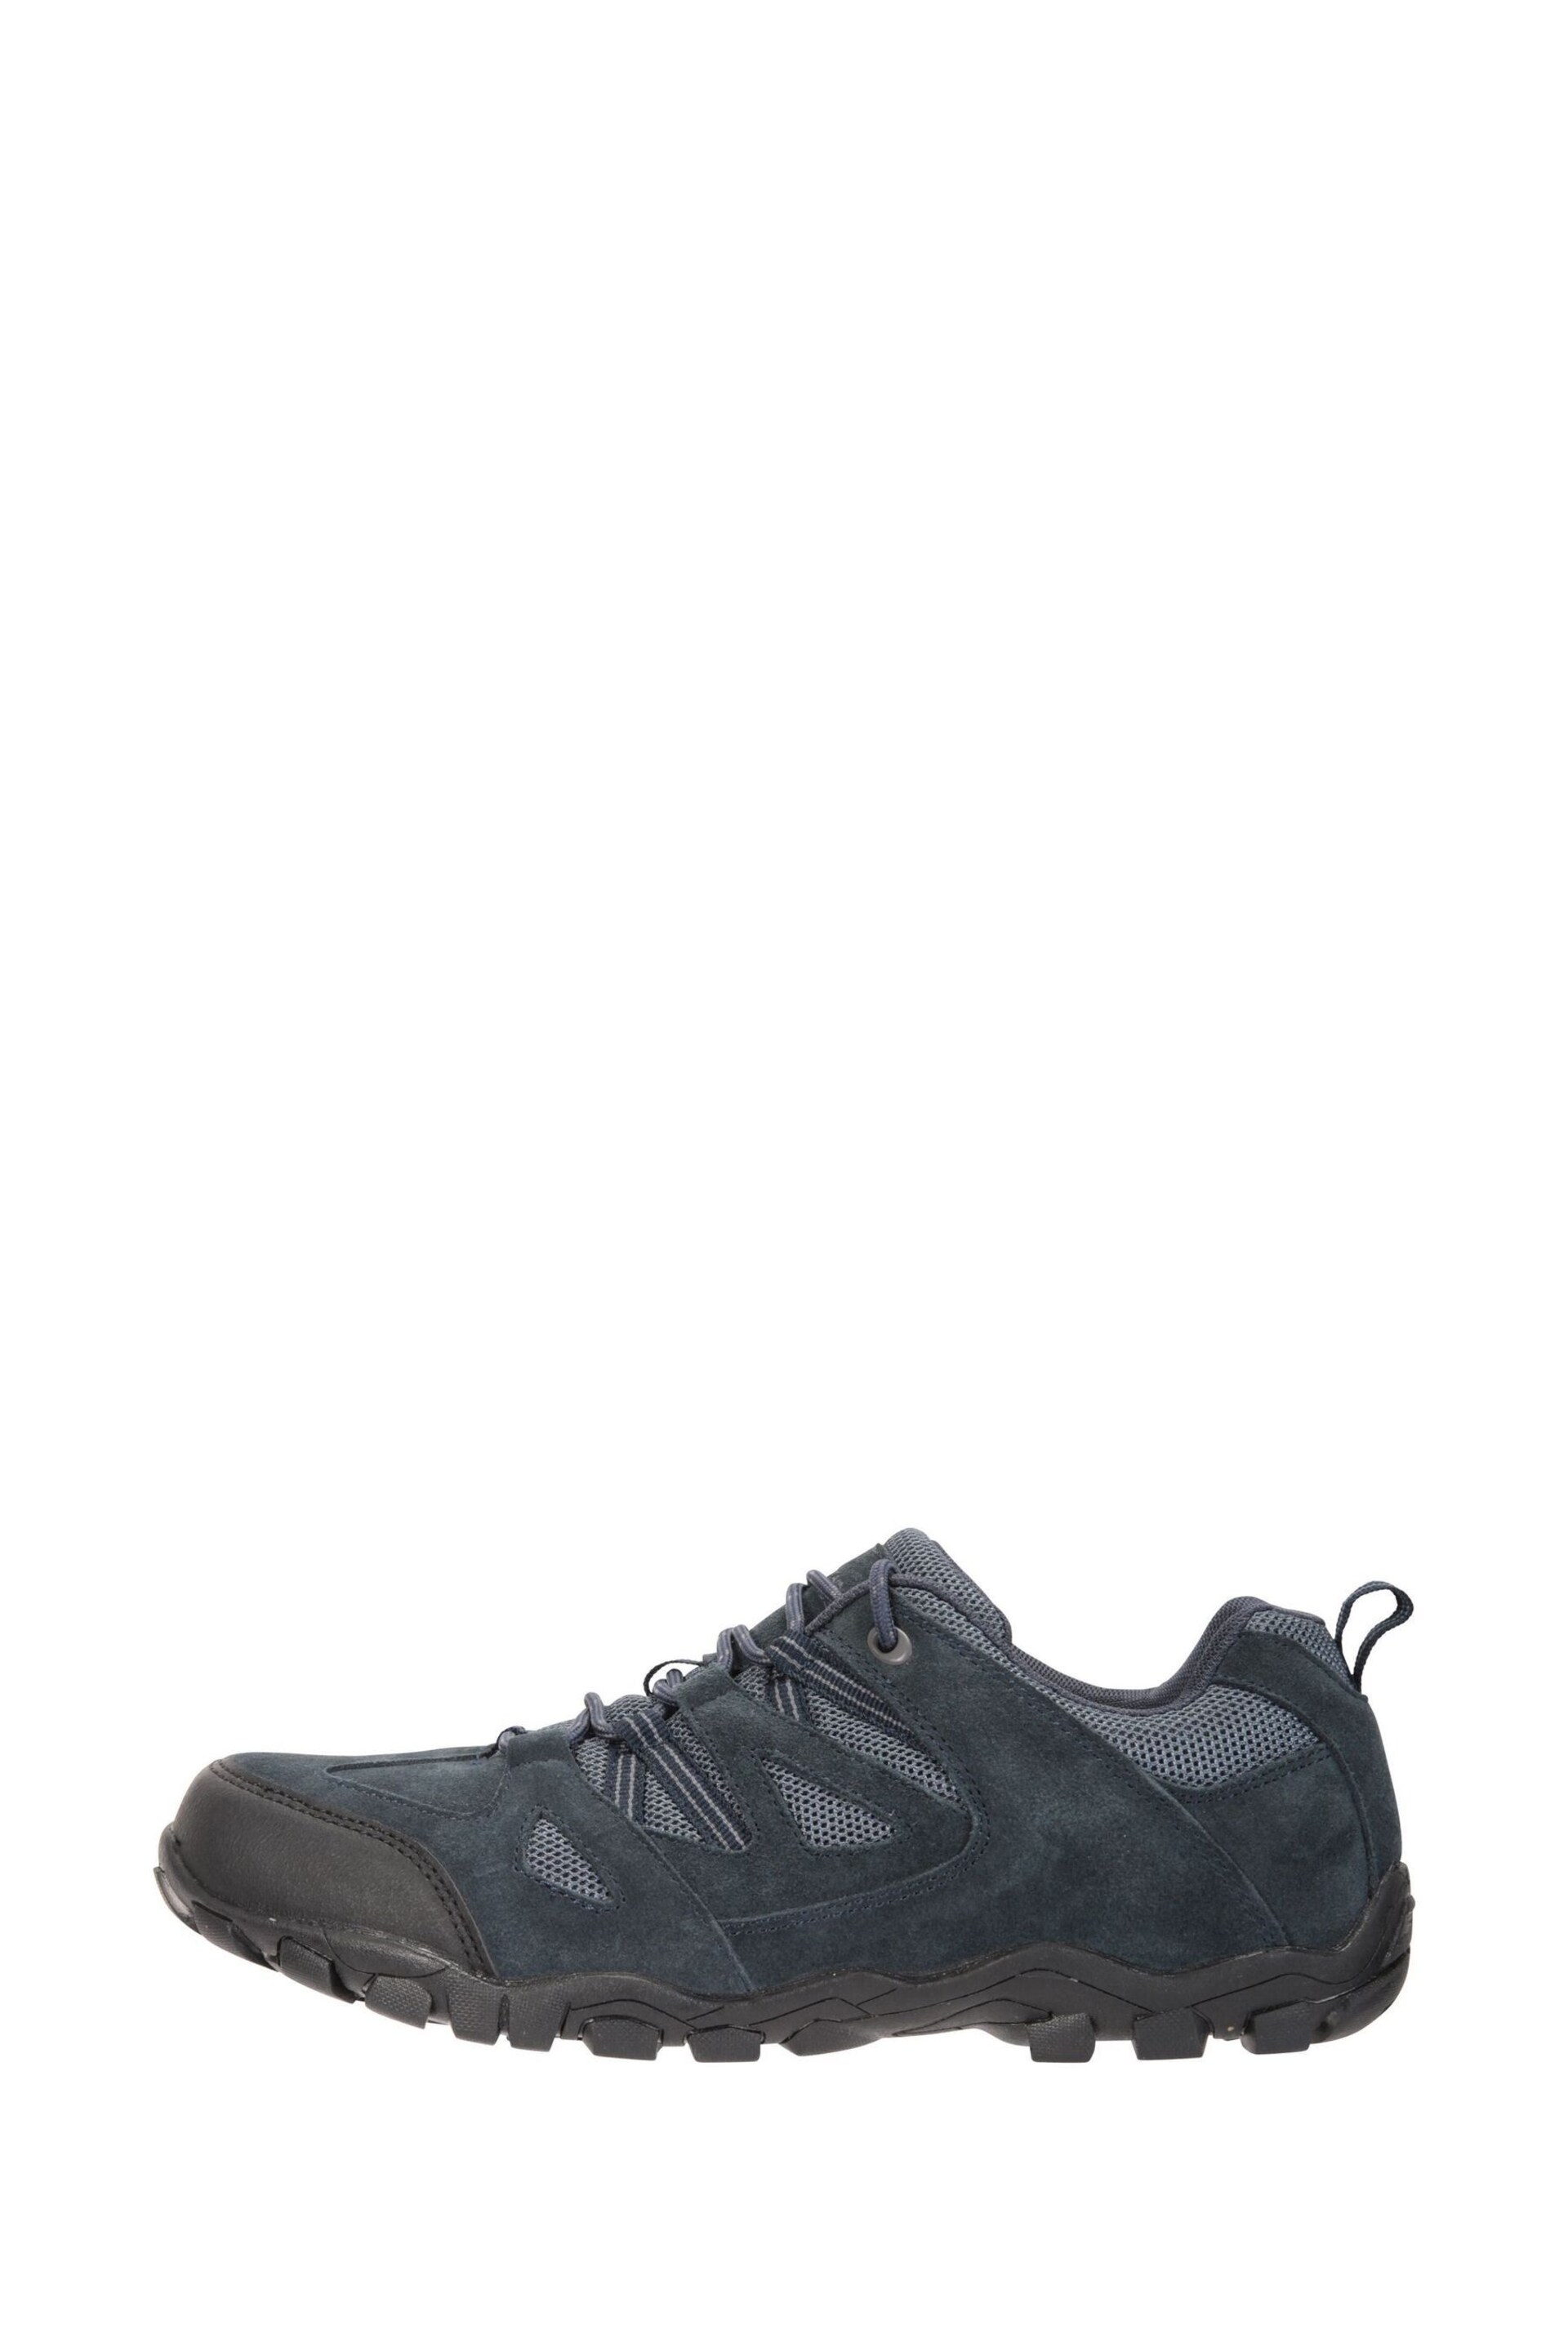 Mountain Warehouse Blue Outdoor III Walking Shoes - Men - Image 5 of 5